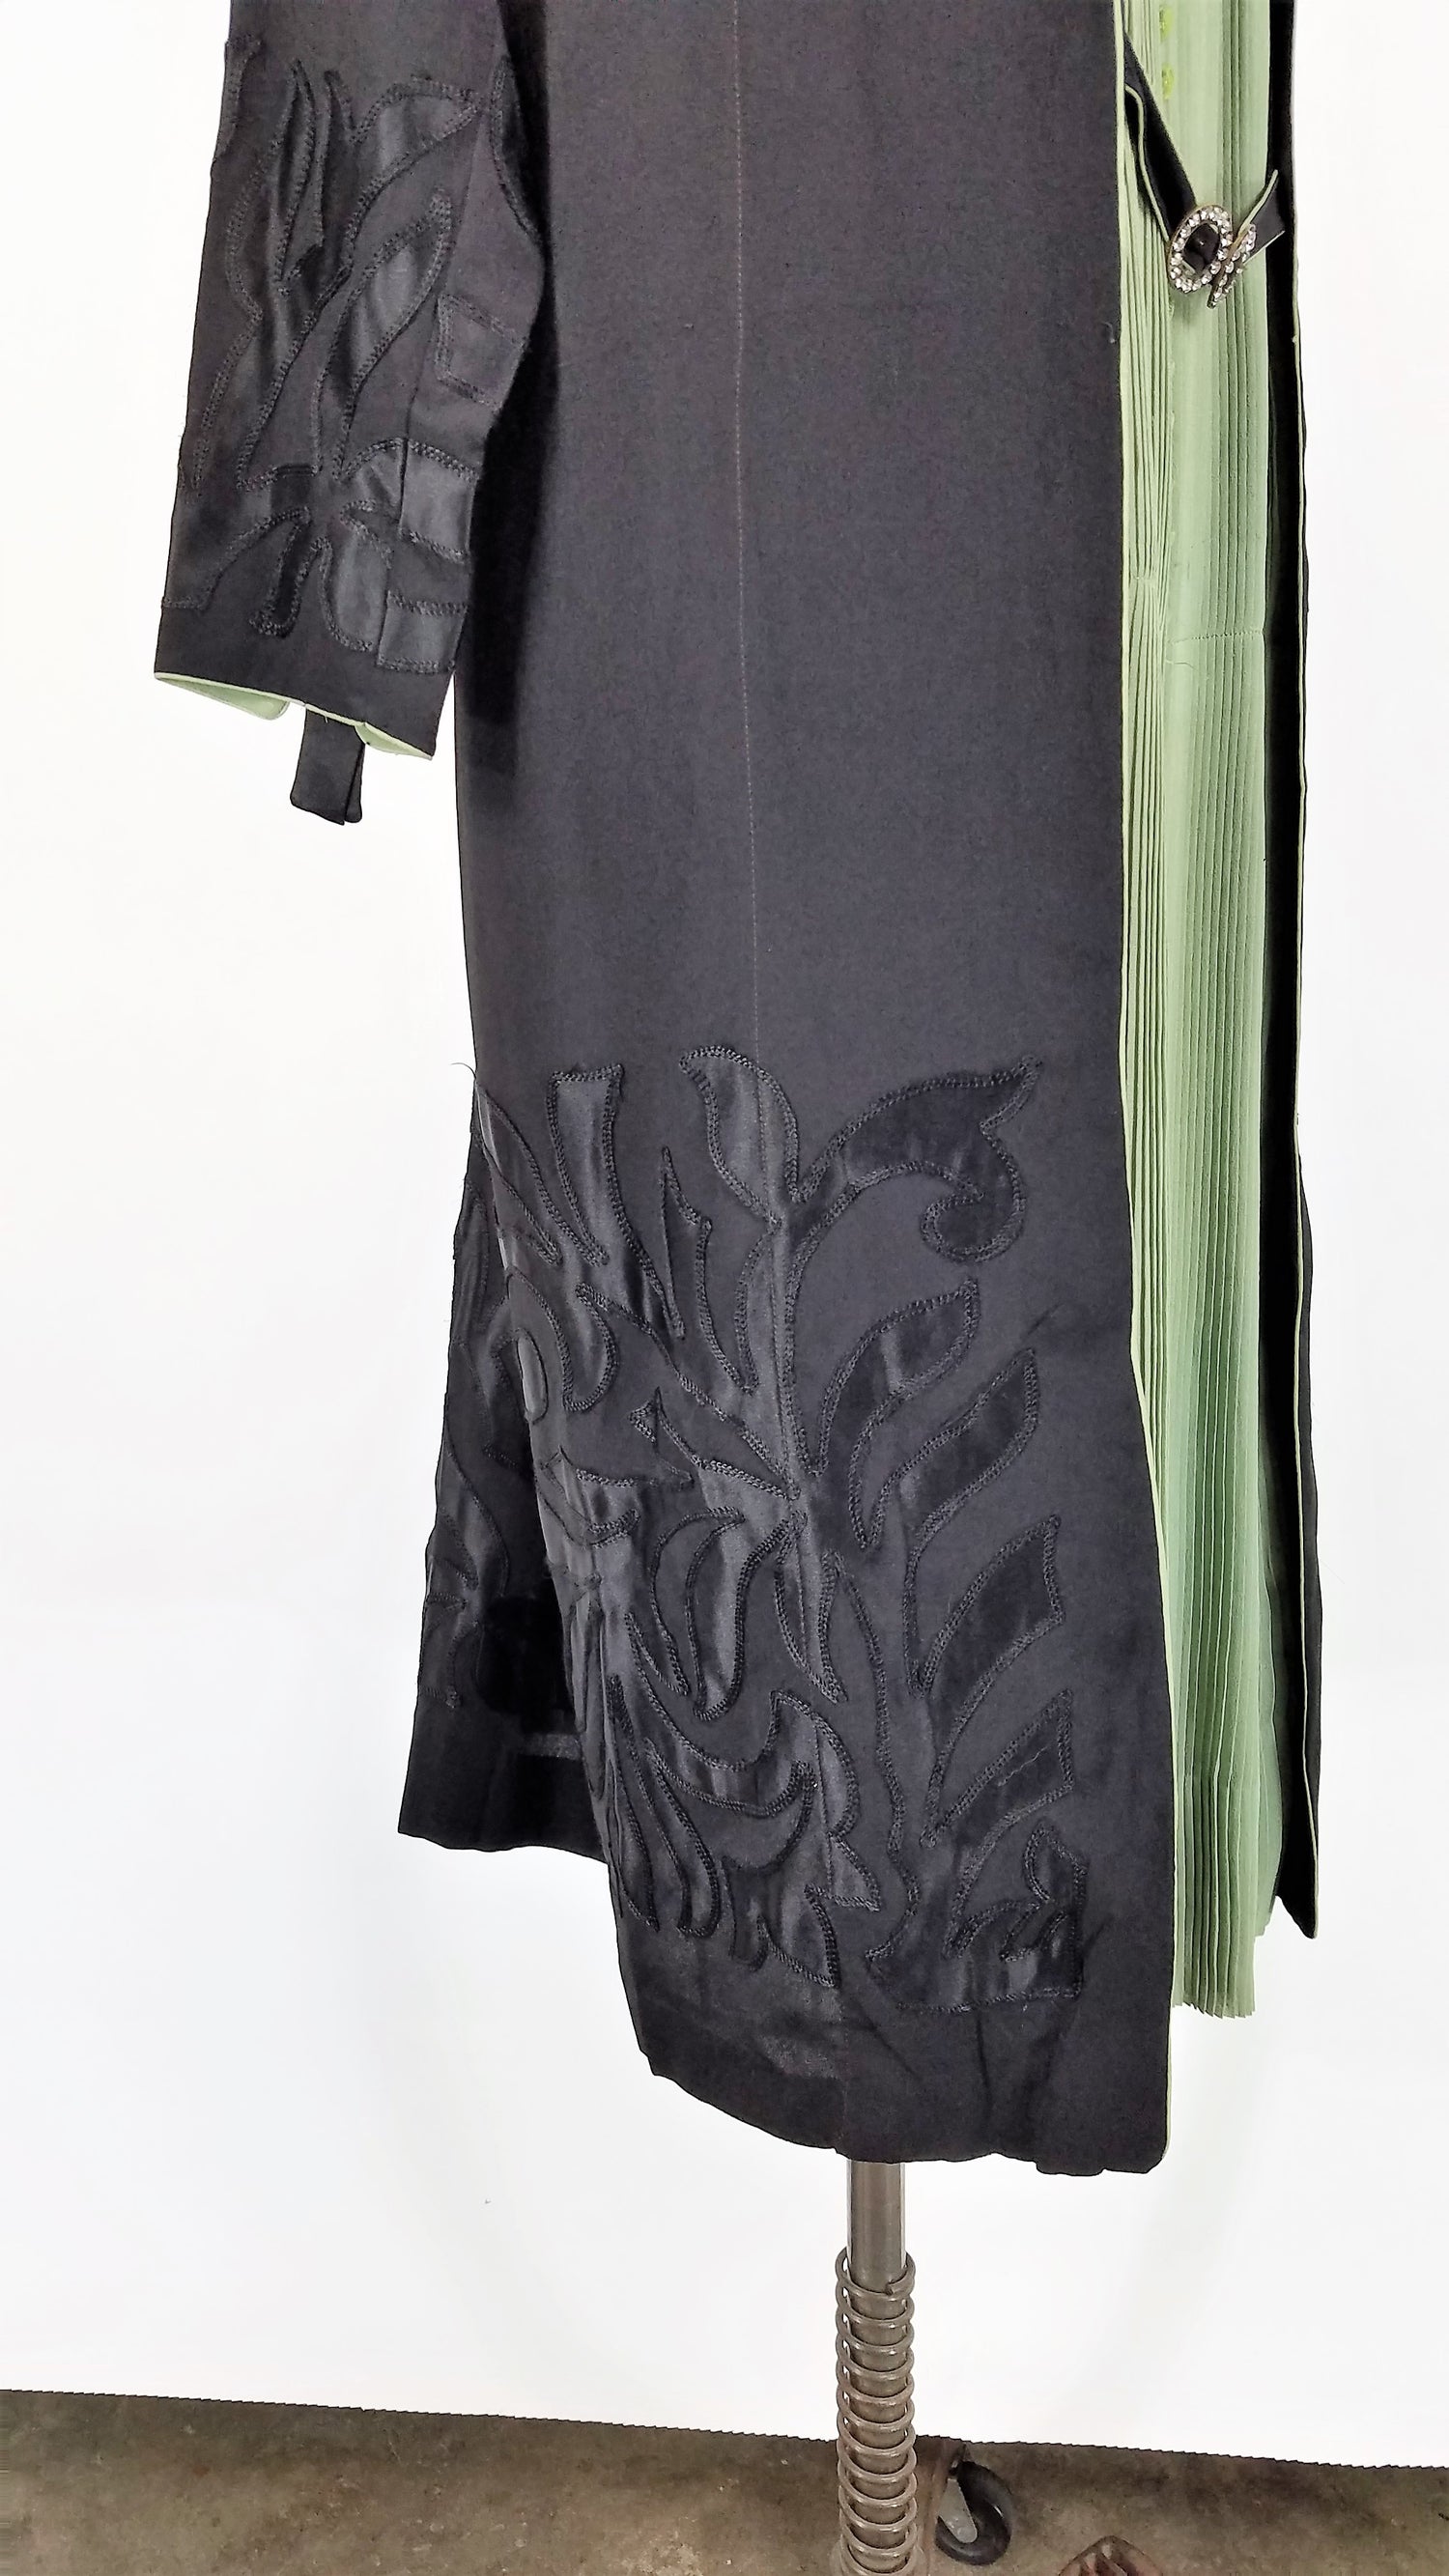 Vintage 1920s Black And Green Dress